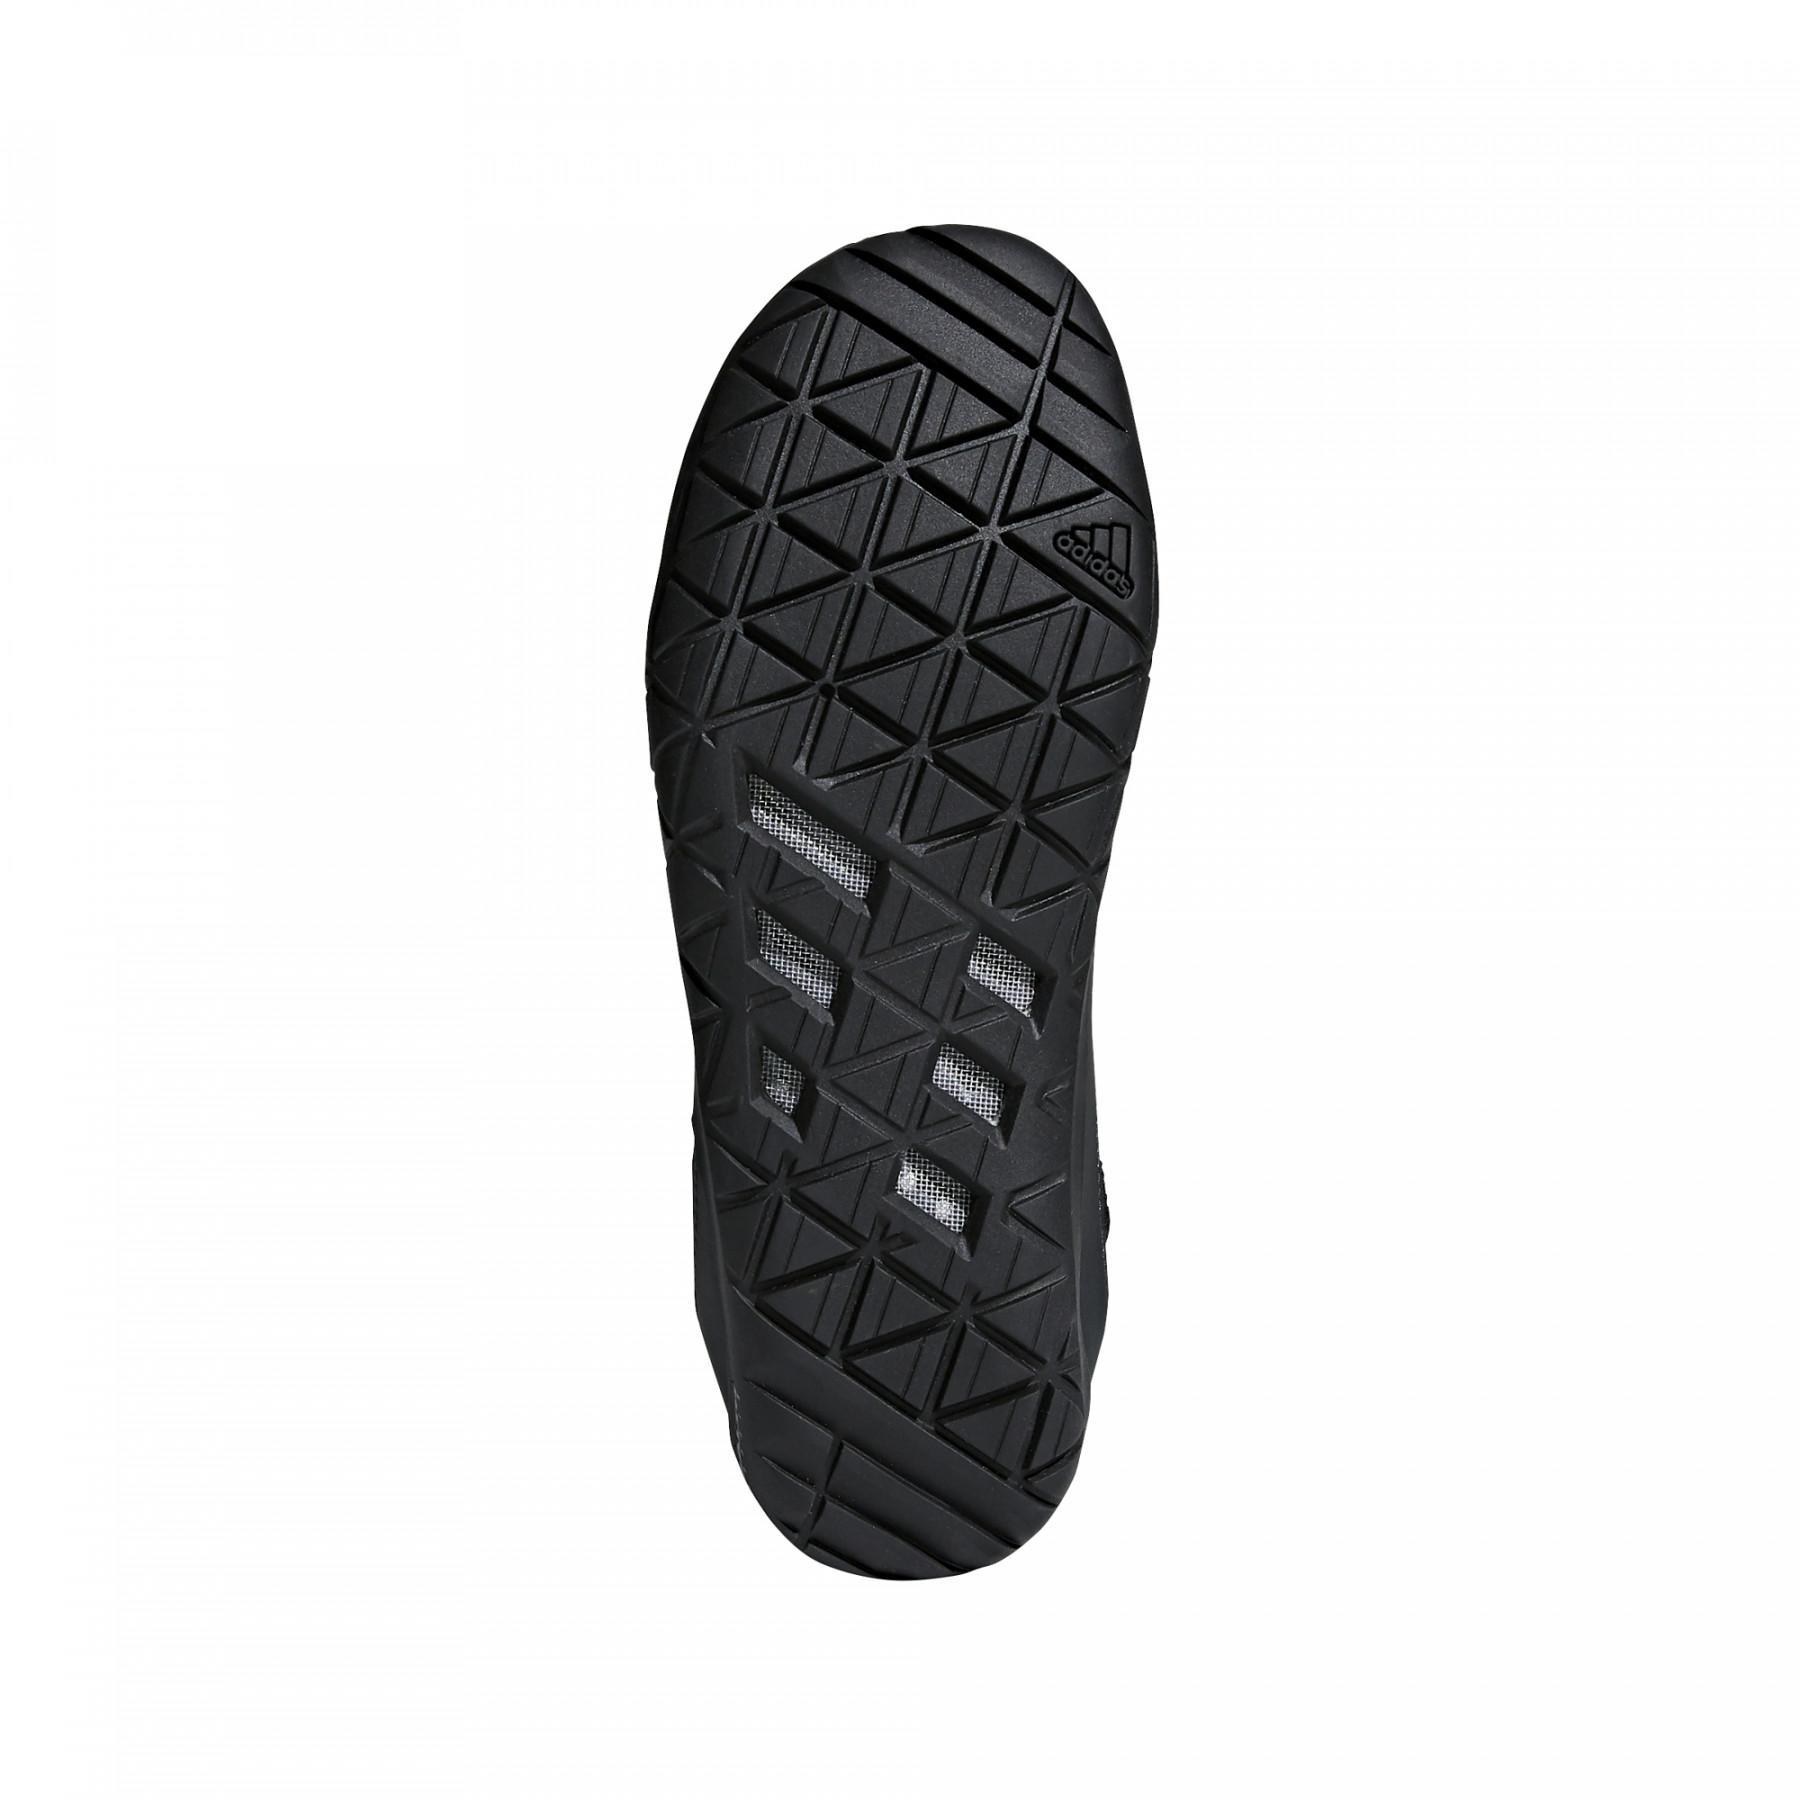 Chaussures adidas Terrex Climacool Jawpaw Slip-On